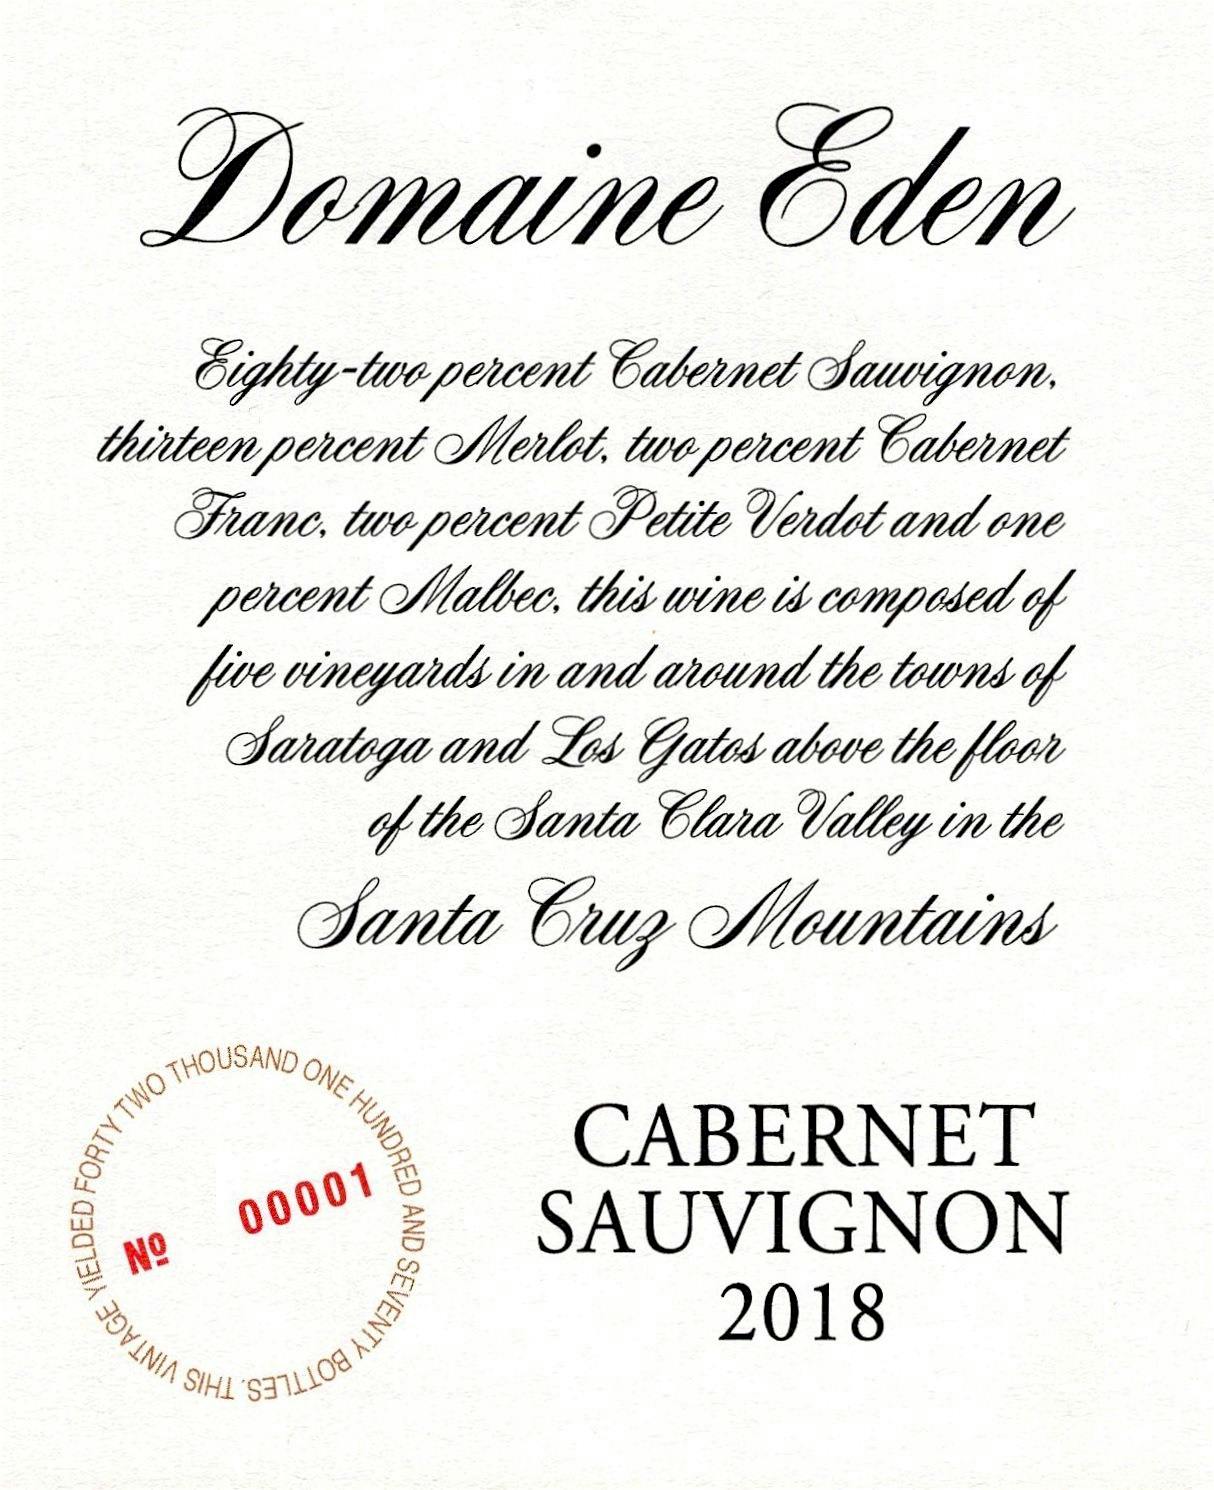 Label for Domaine Eden